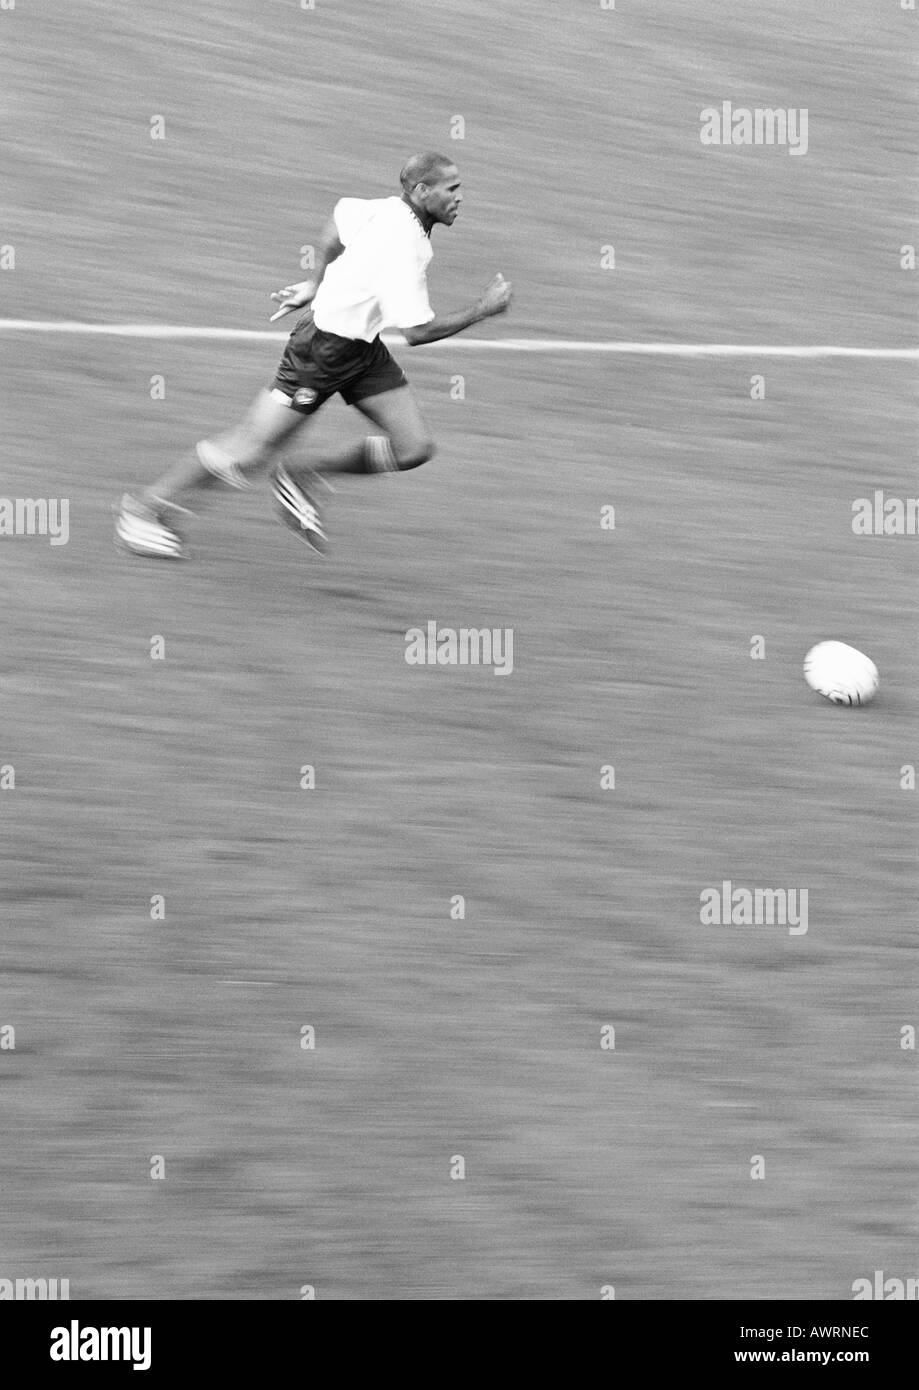 Man running after soccer ball, blurred, b&w. Stock Photo